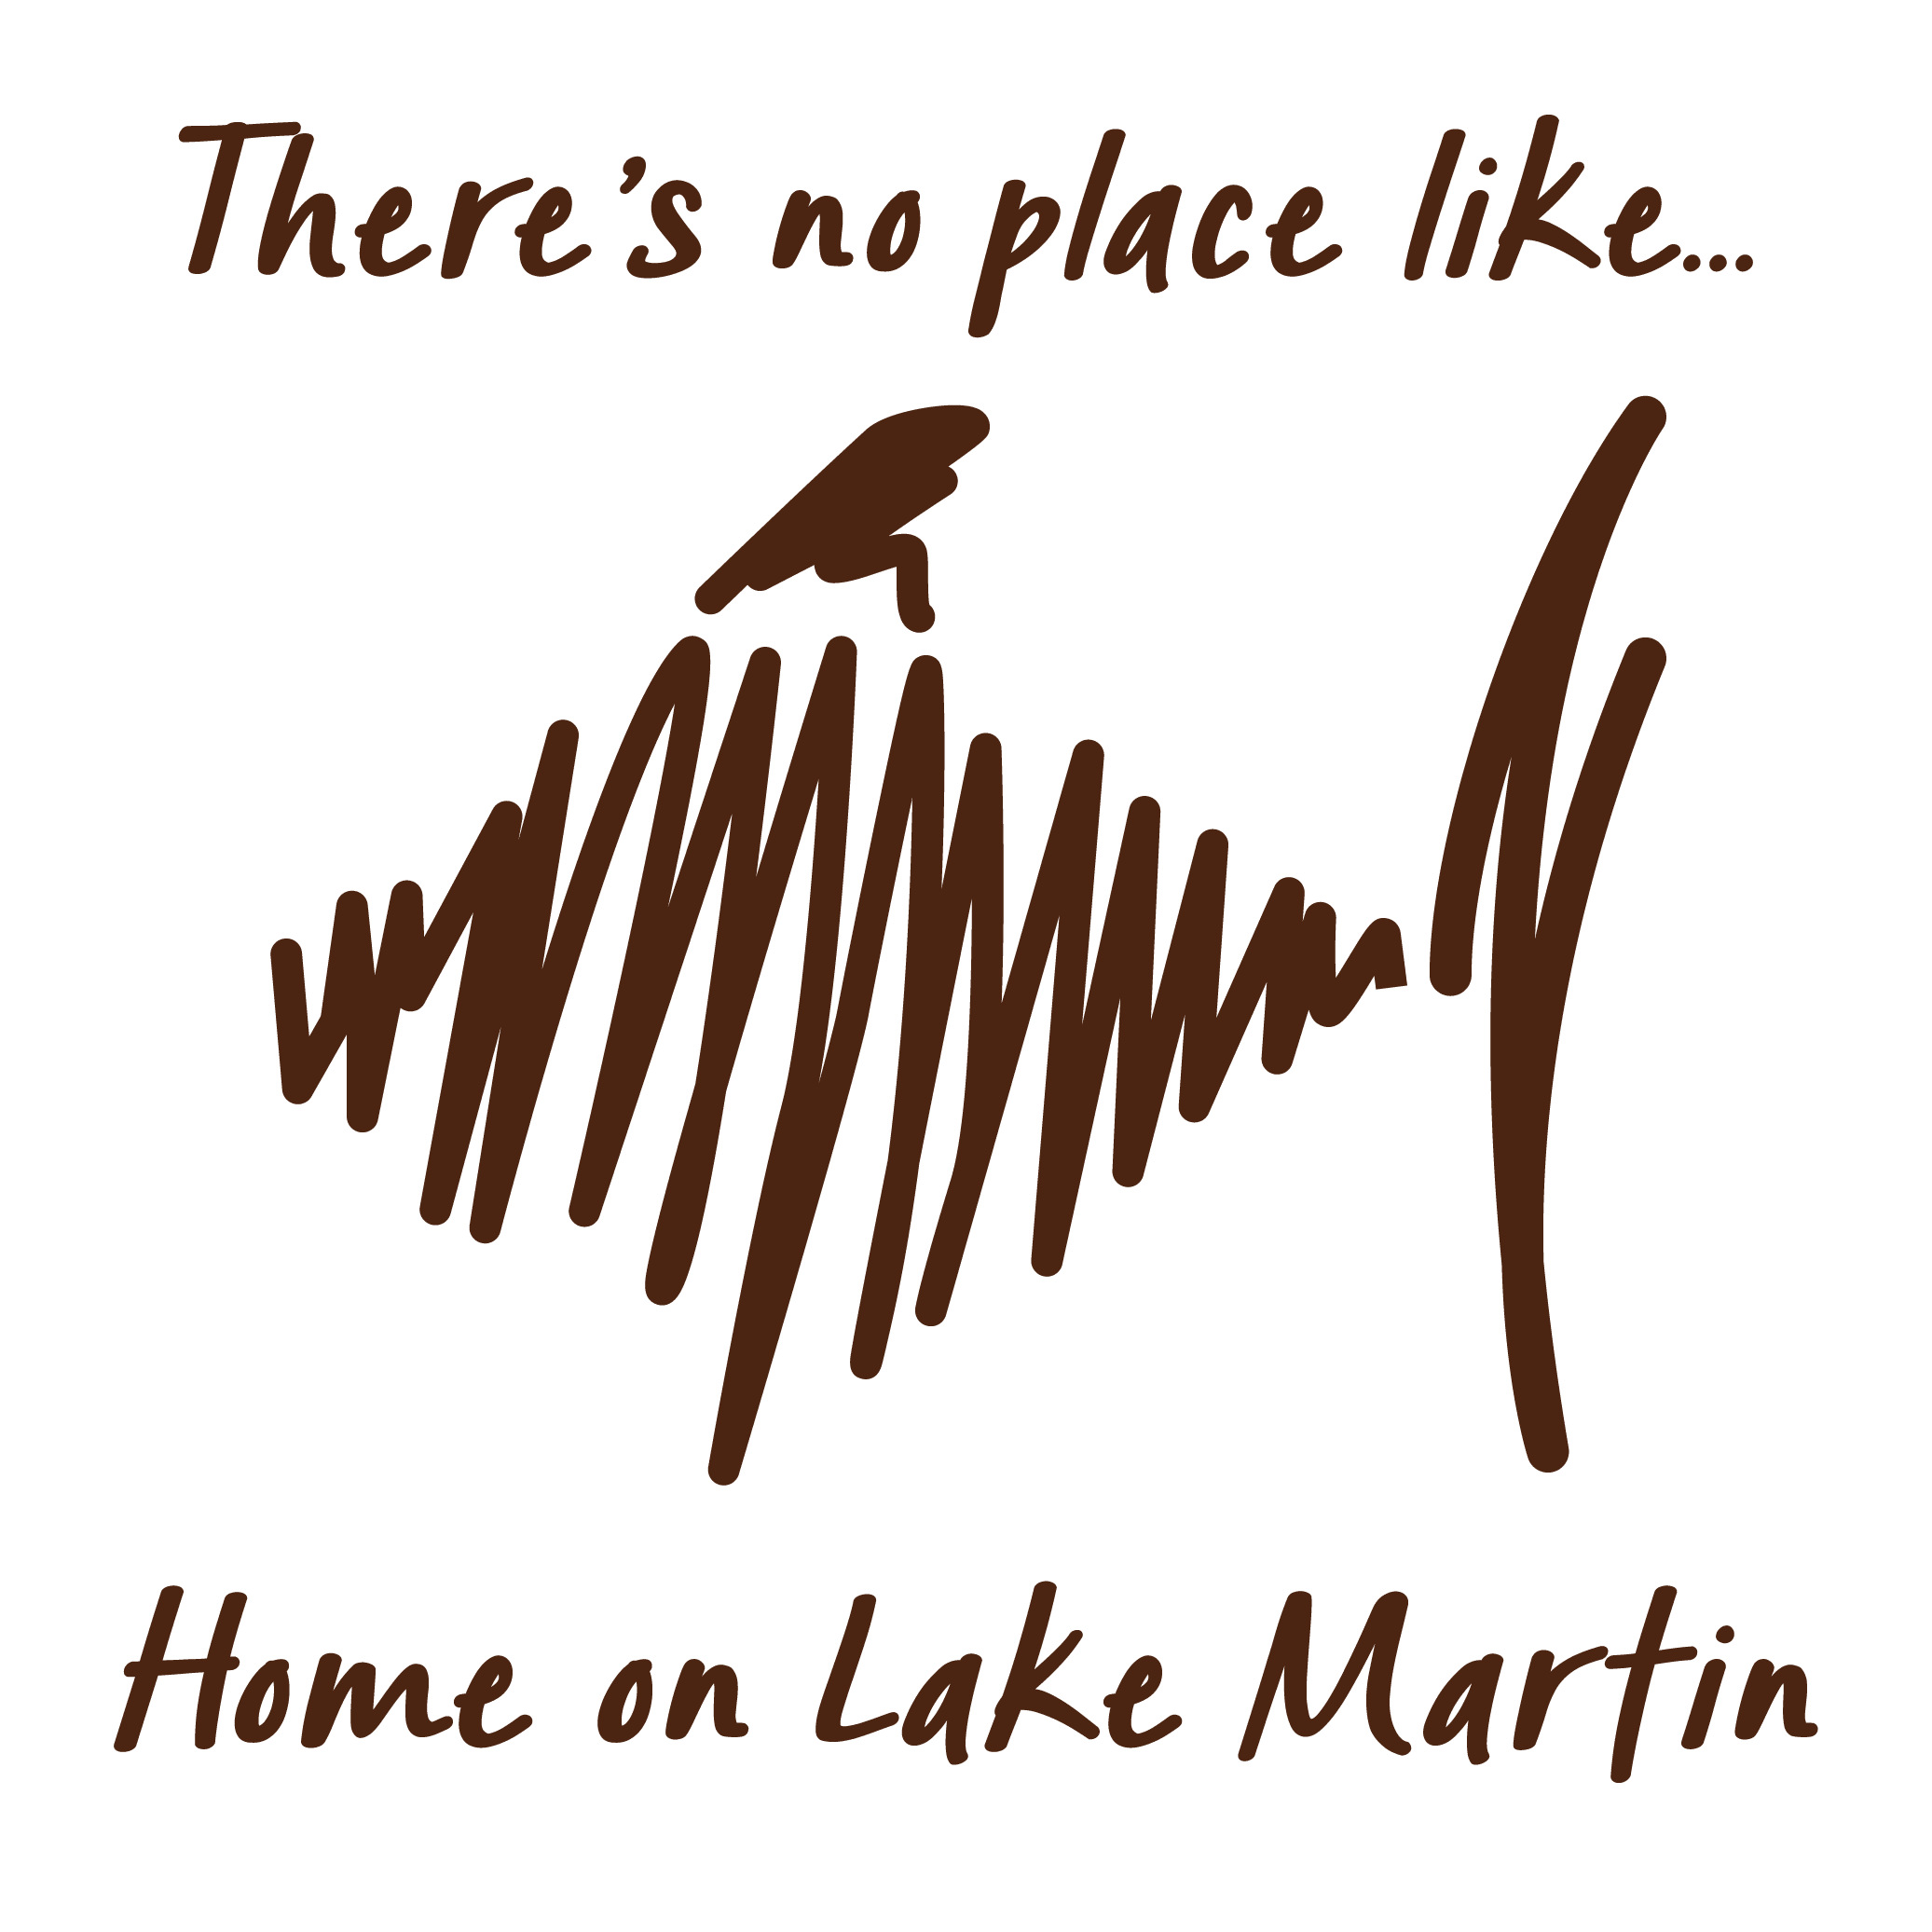 Home on Lake Martin